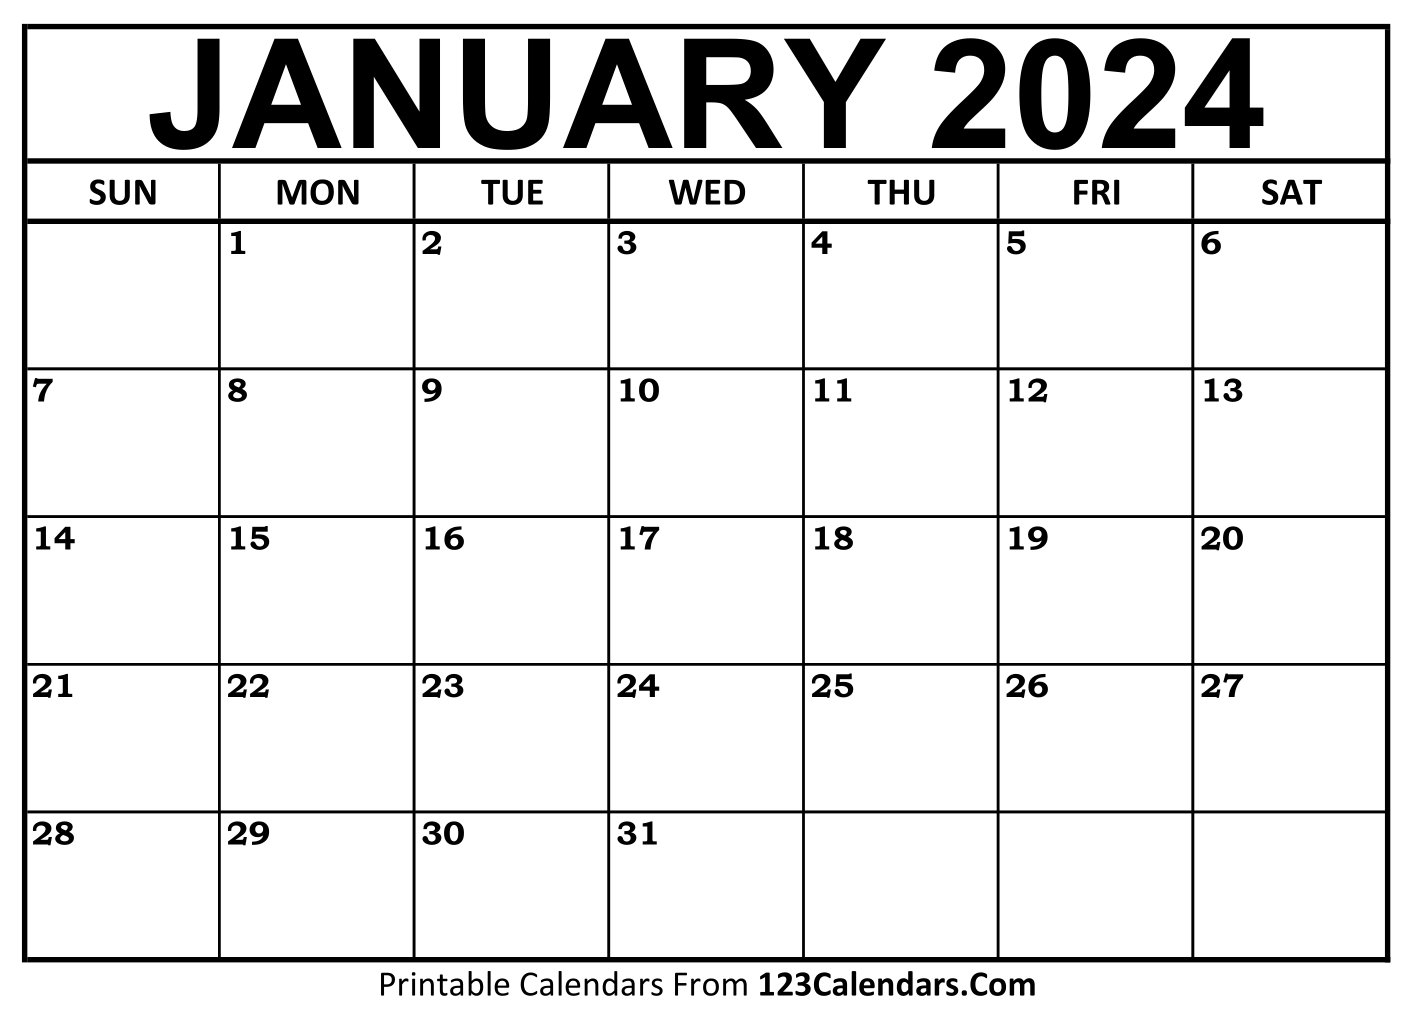 Printable January 2024 Calendar Templates - 123Calendars for Printable January Calendar 2024 Free